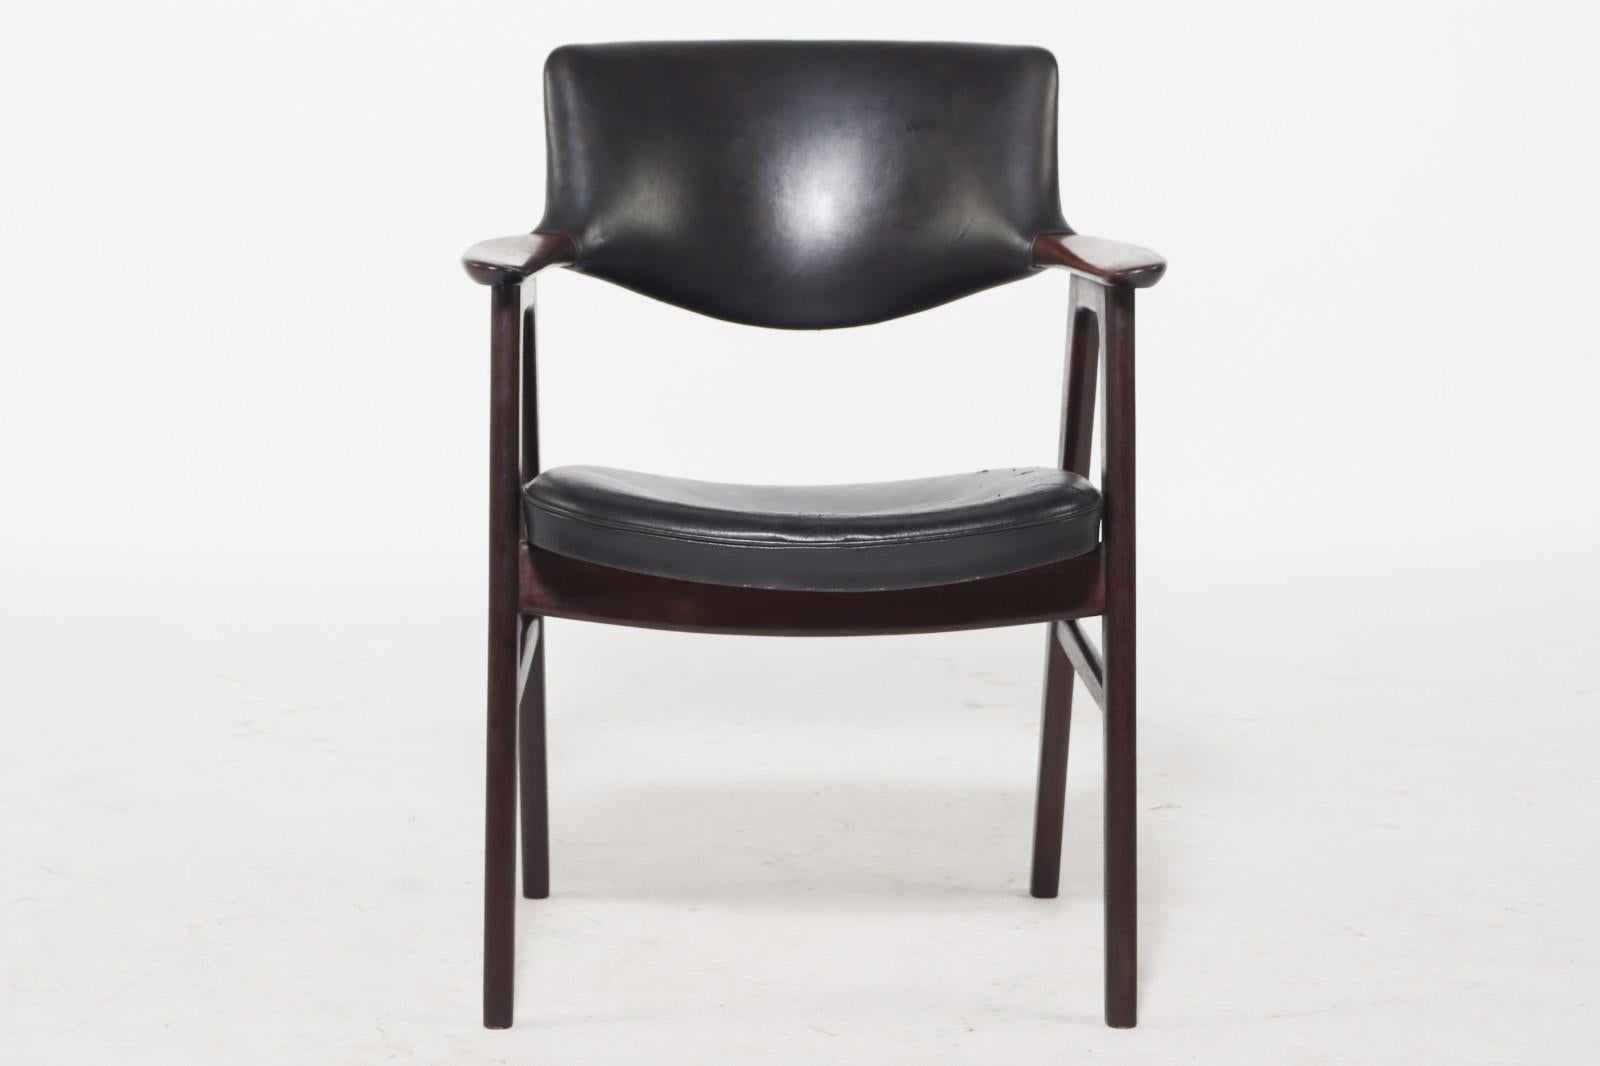 Hardwood frame with leather upholstered seat and back rest. Designed by Erik Kirkegaard for Høng Stolefabrik in the 1960s, model 43. 
Original condition.